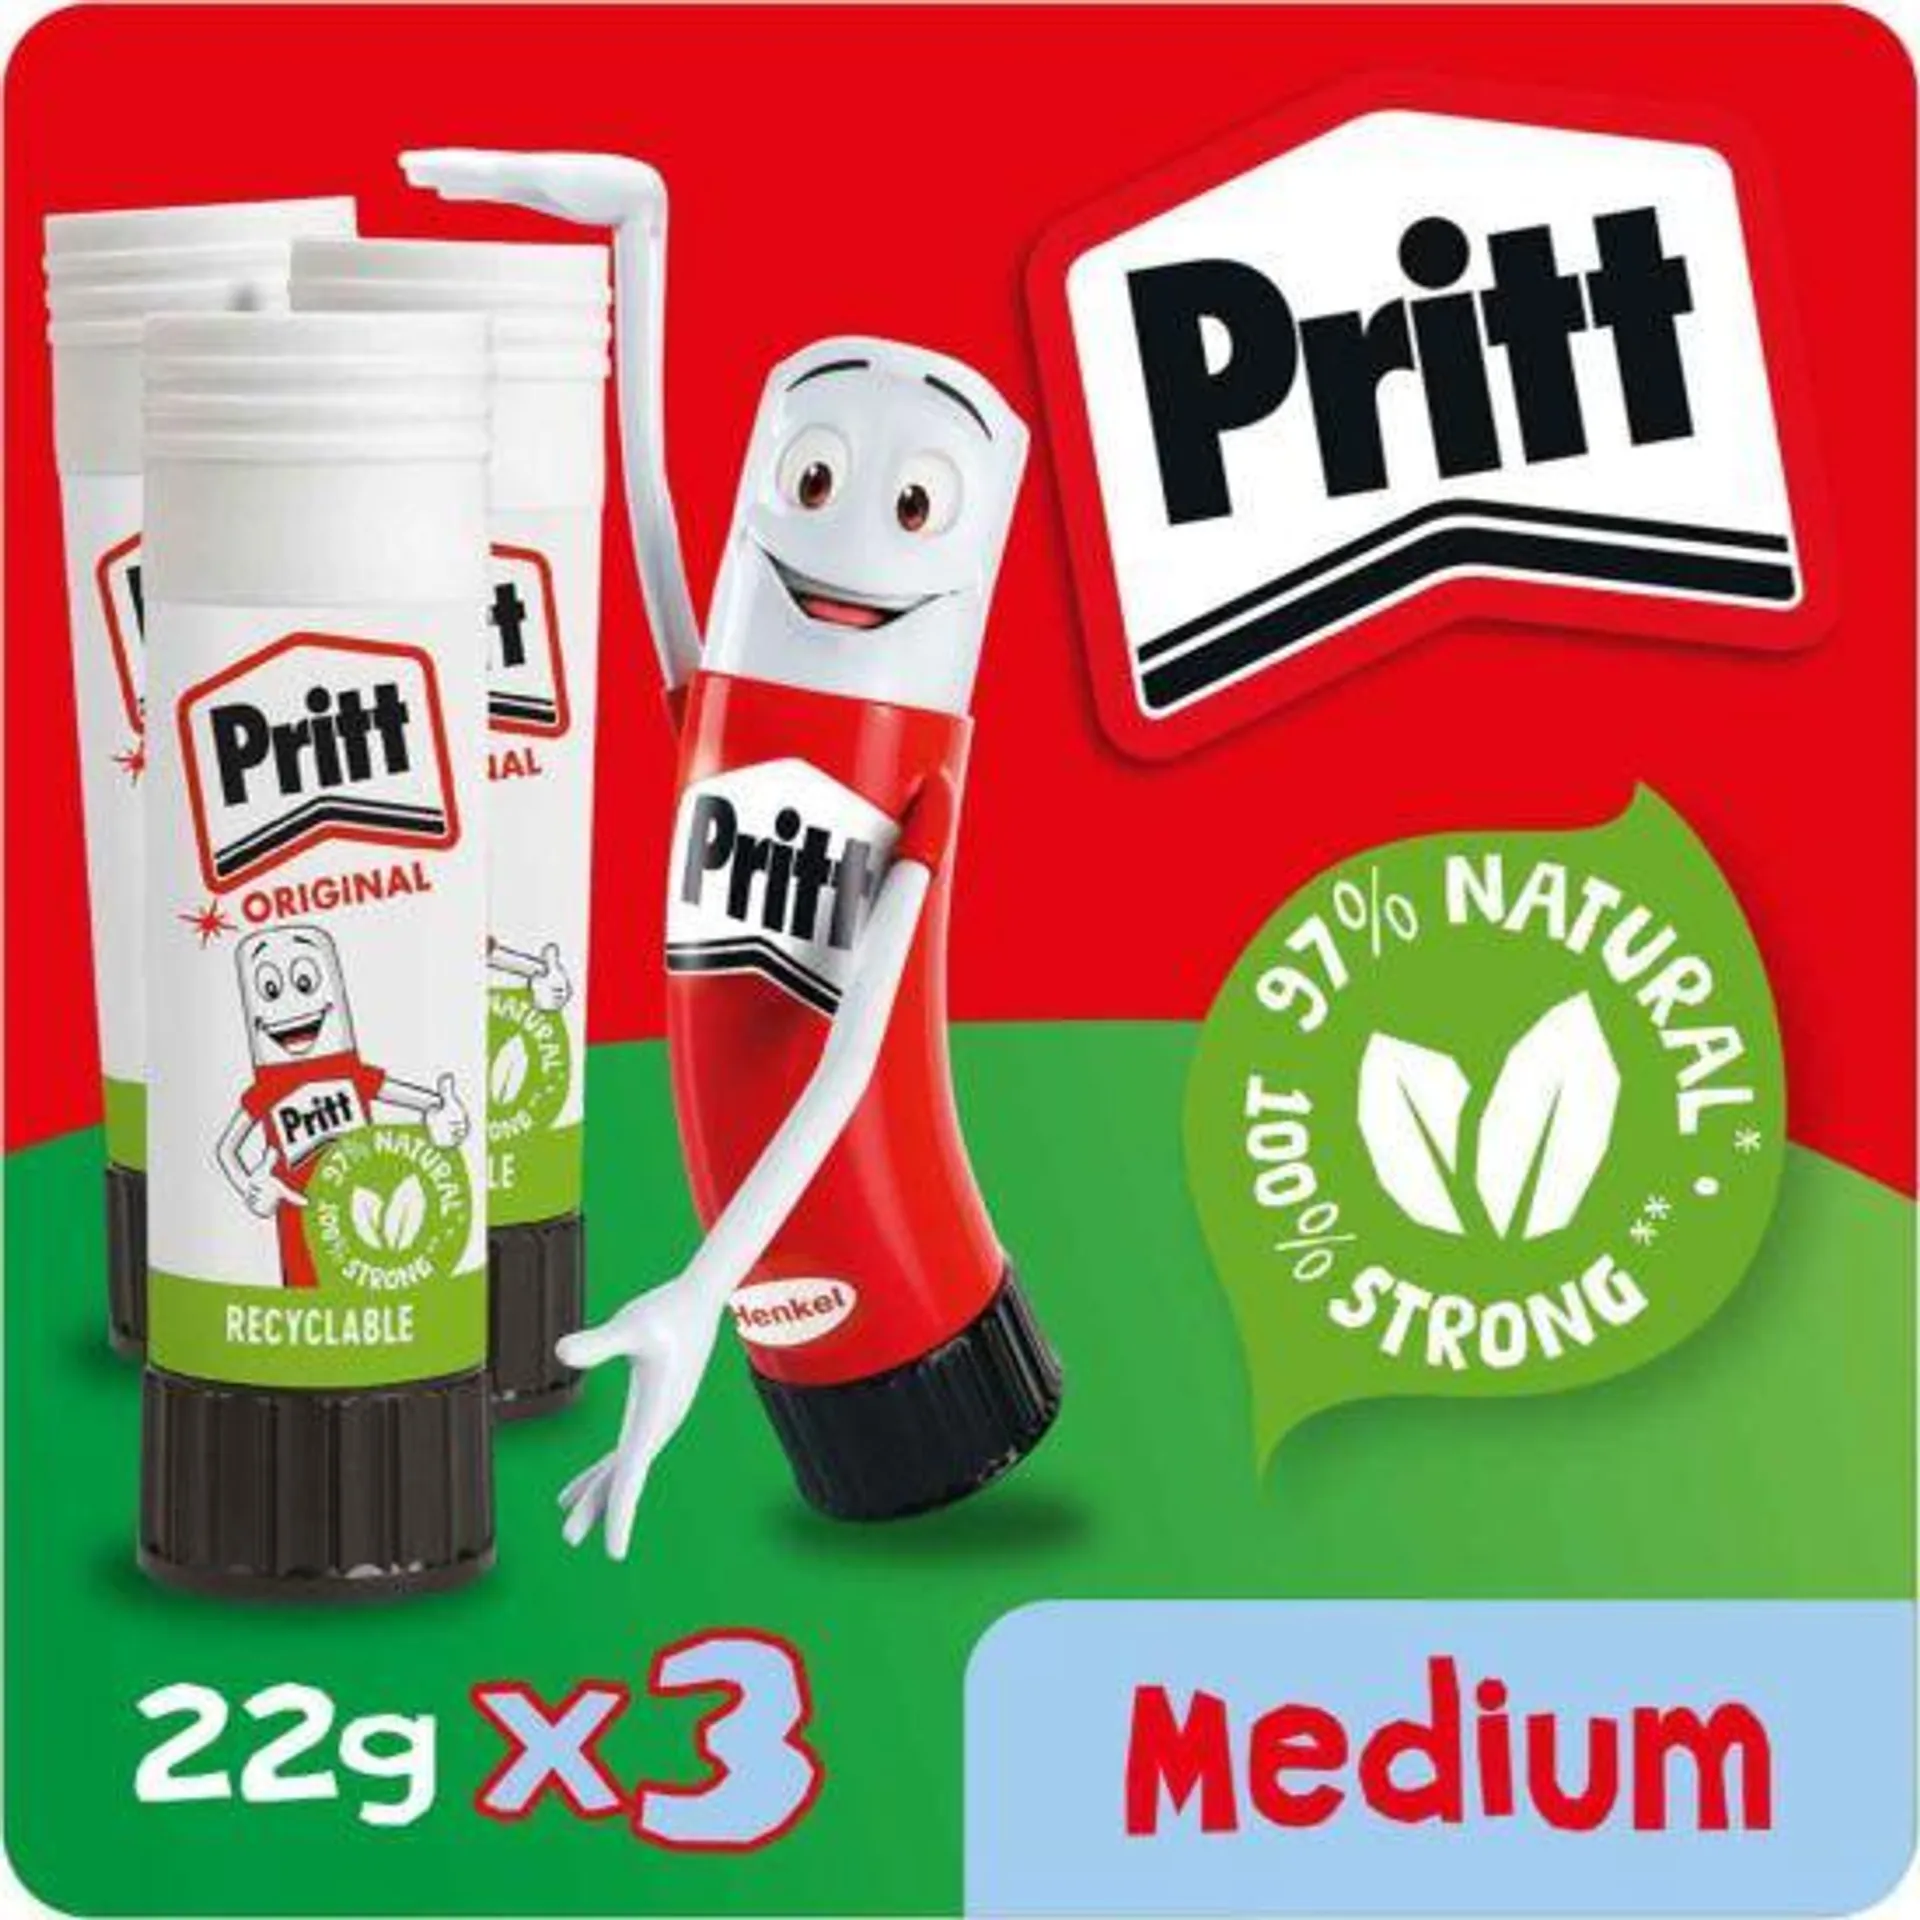 Pritt Stick Pack of 3 x 22g